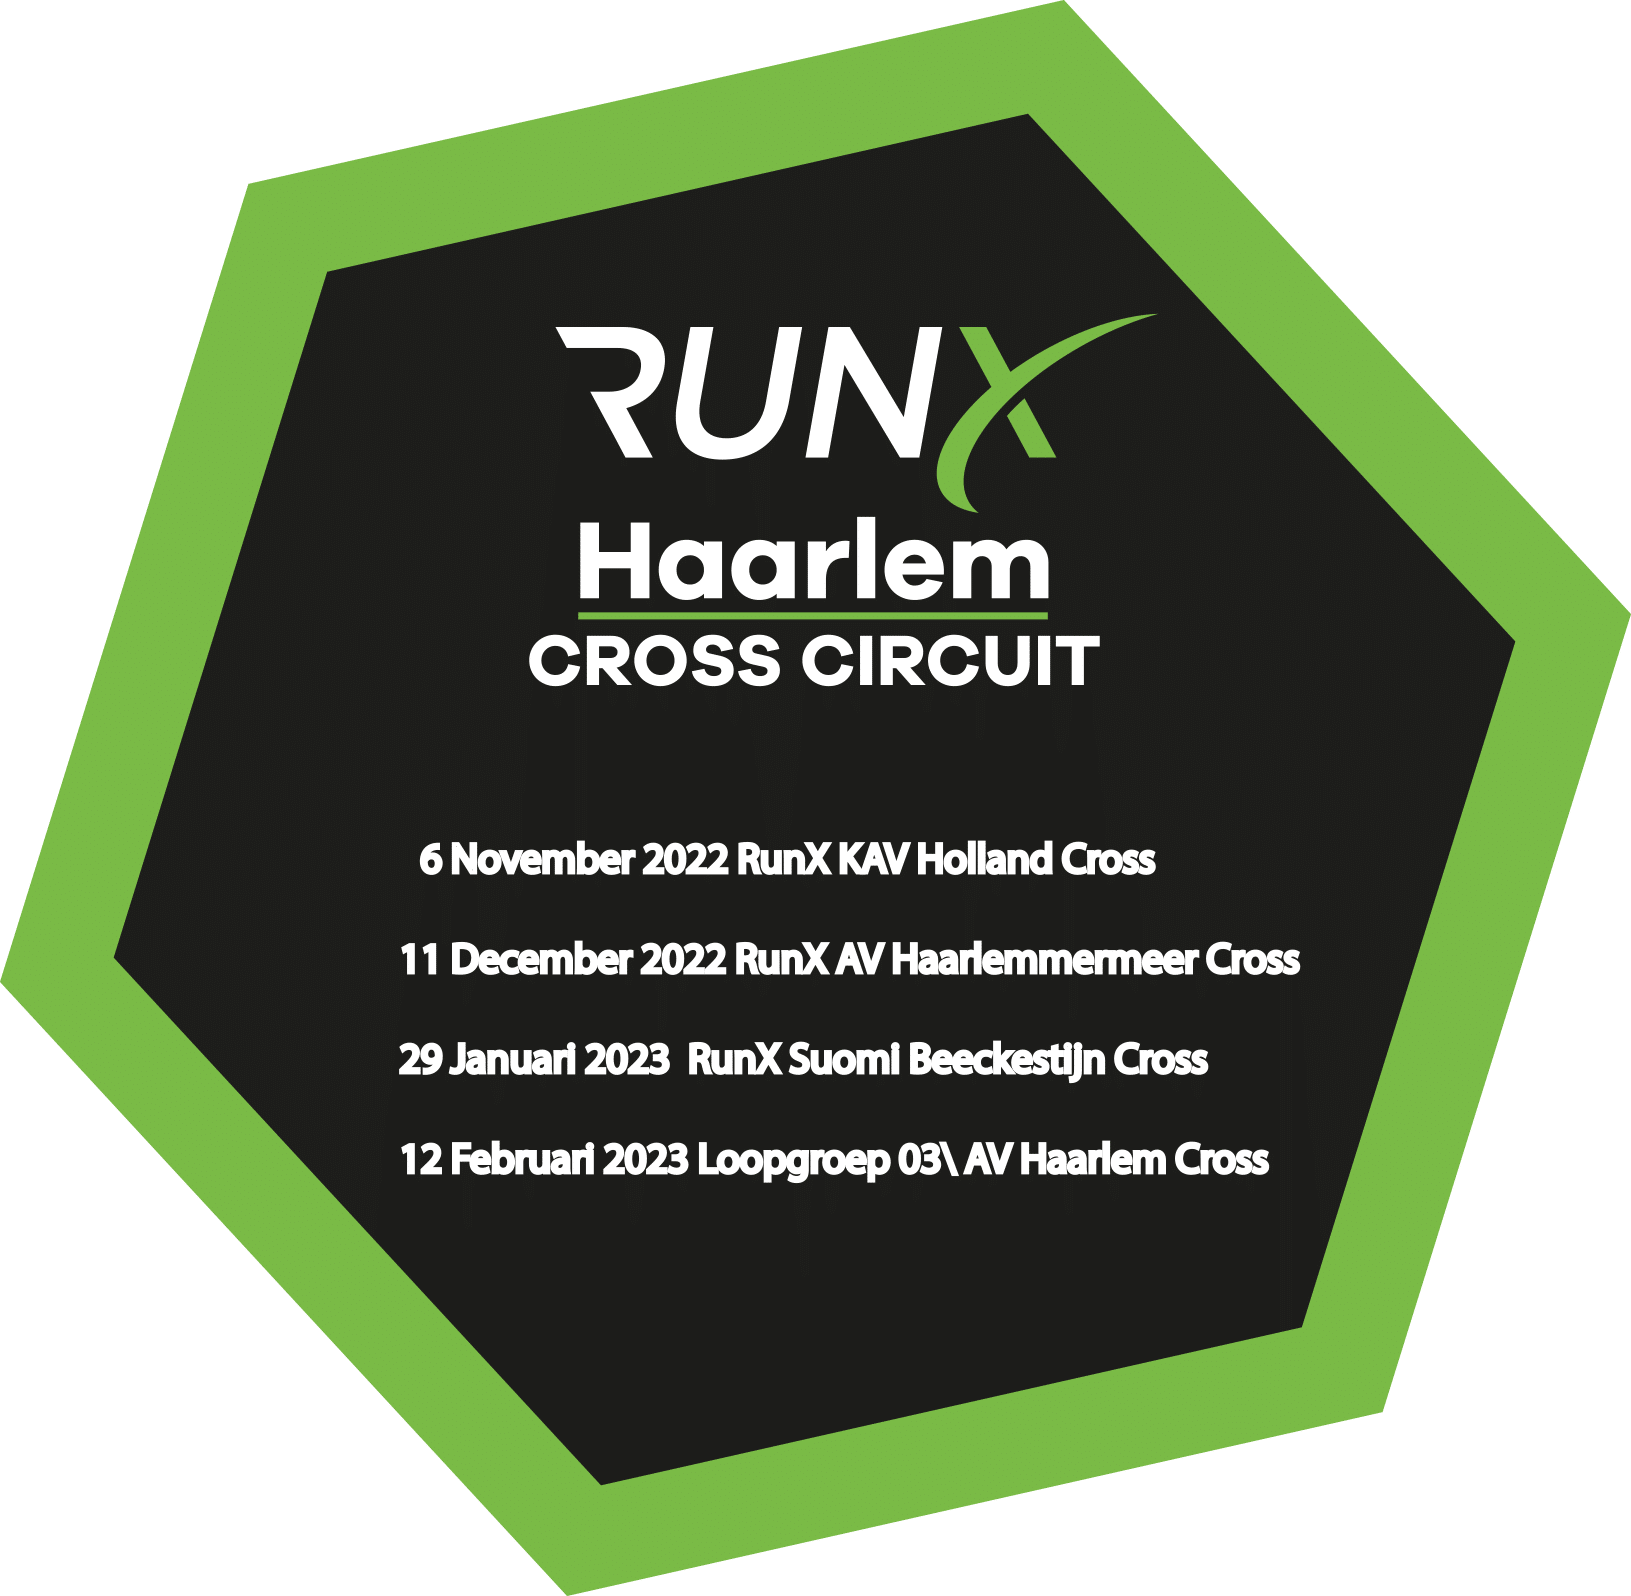 RunX Haarlem Cross Circuit 2022-2023